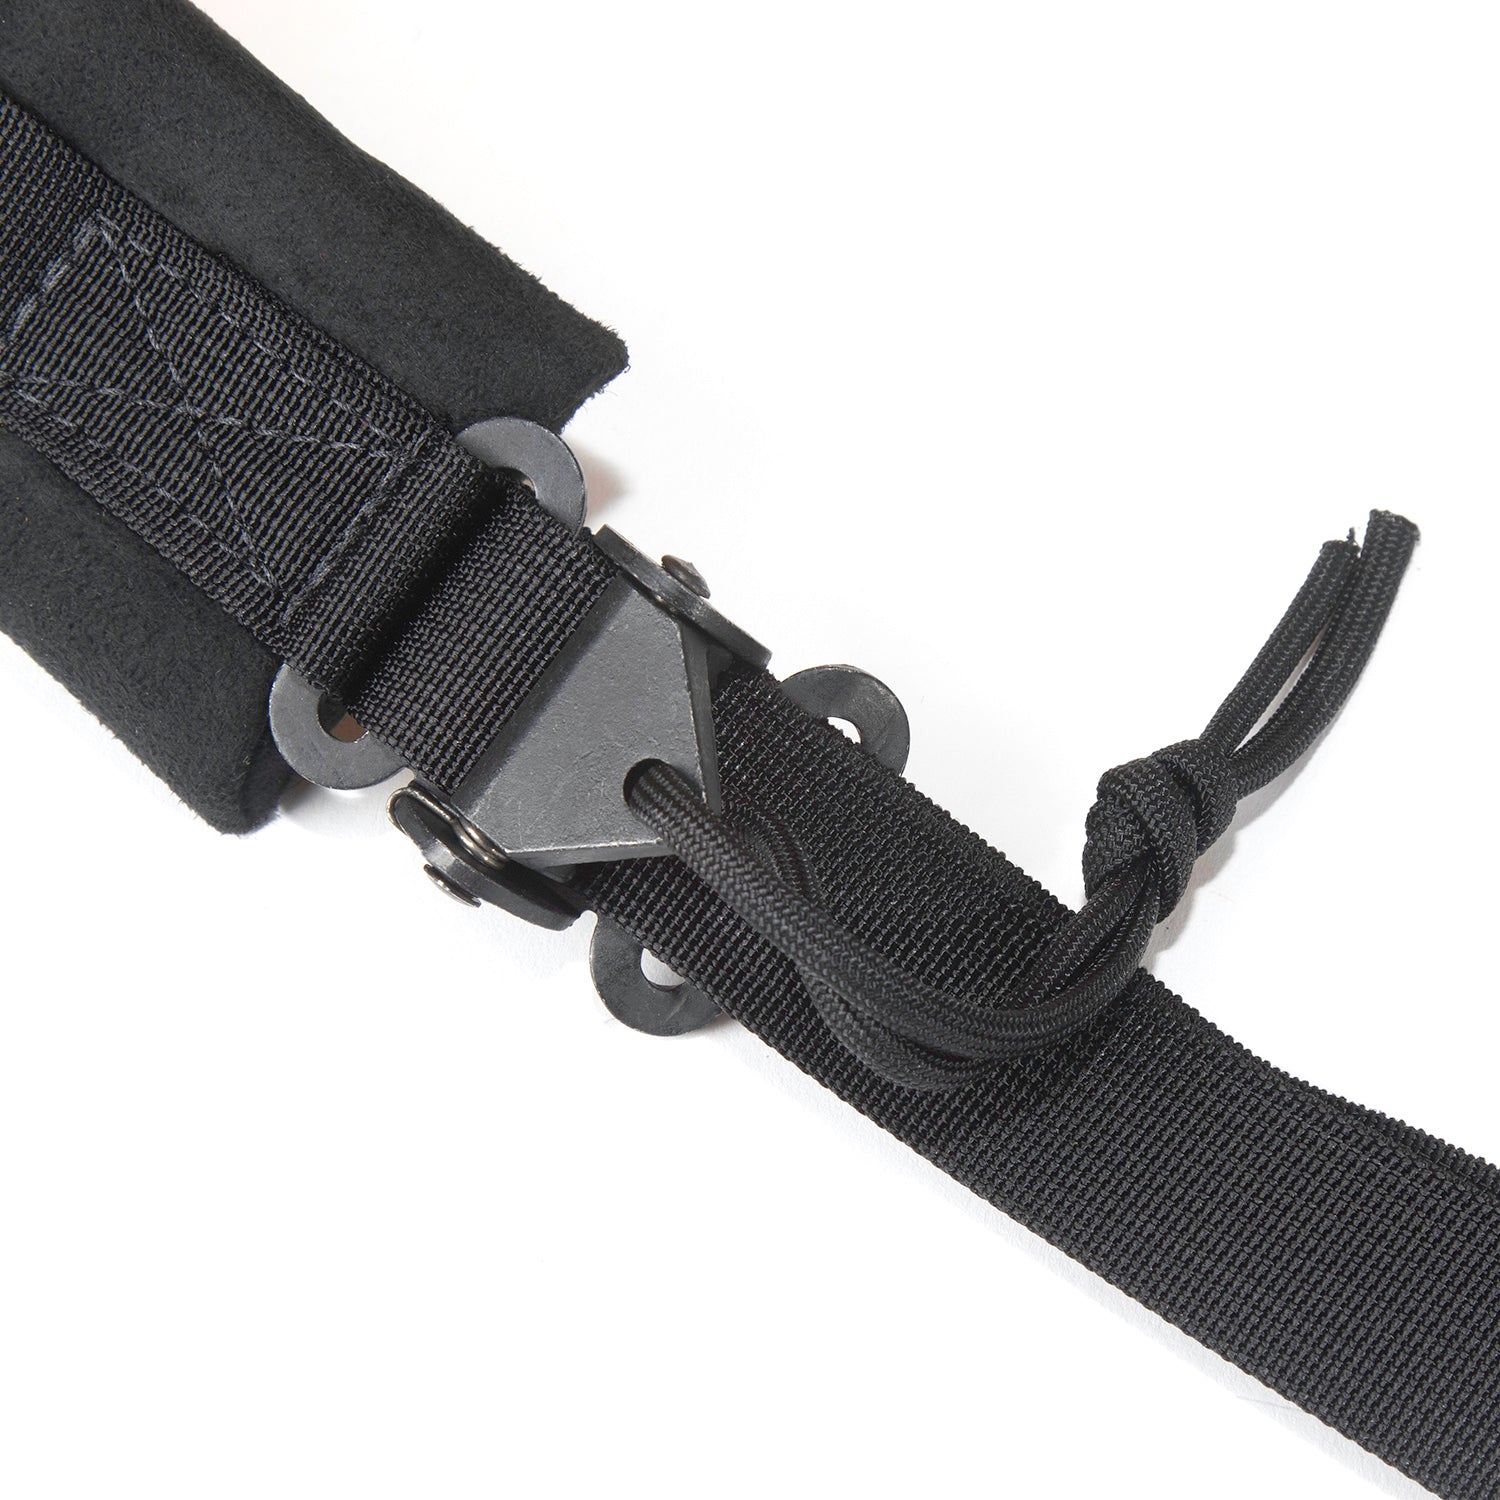 Shoulder strap adjuster is an ALICE style. 